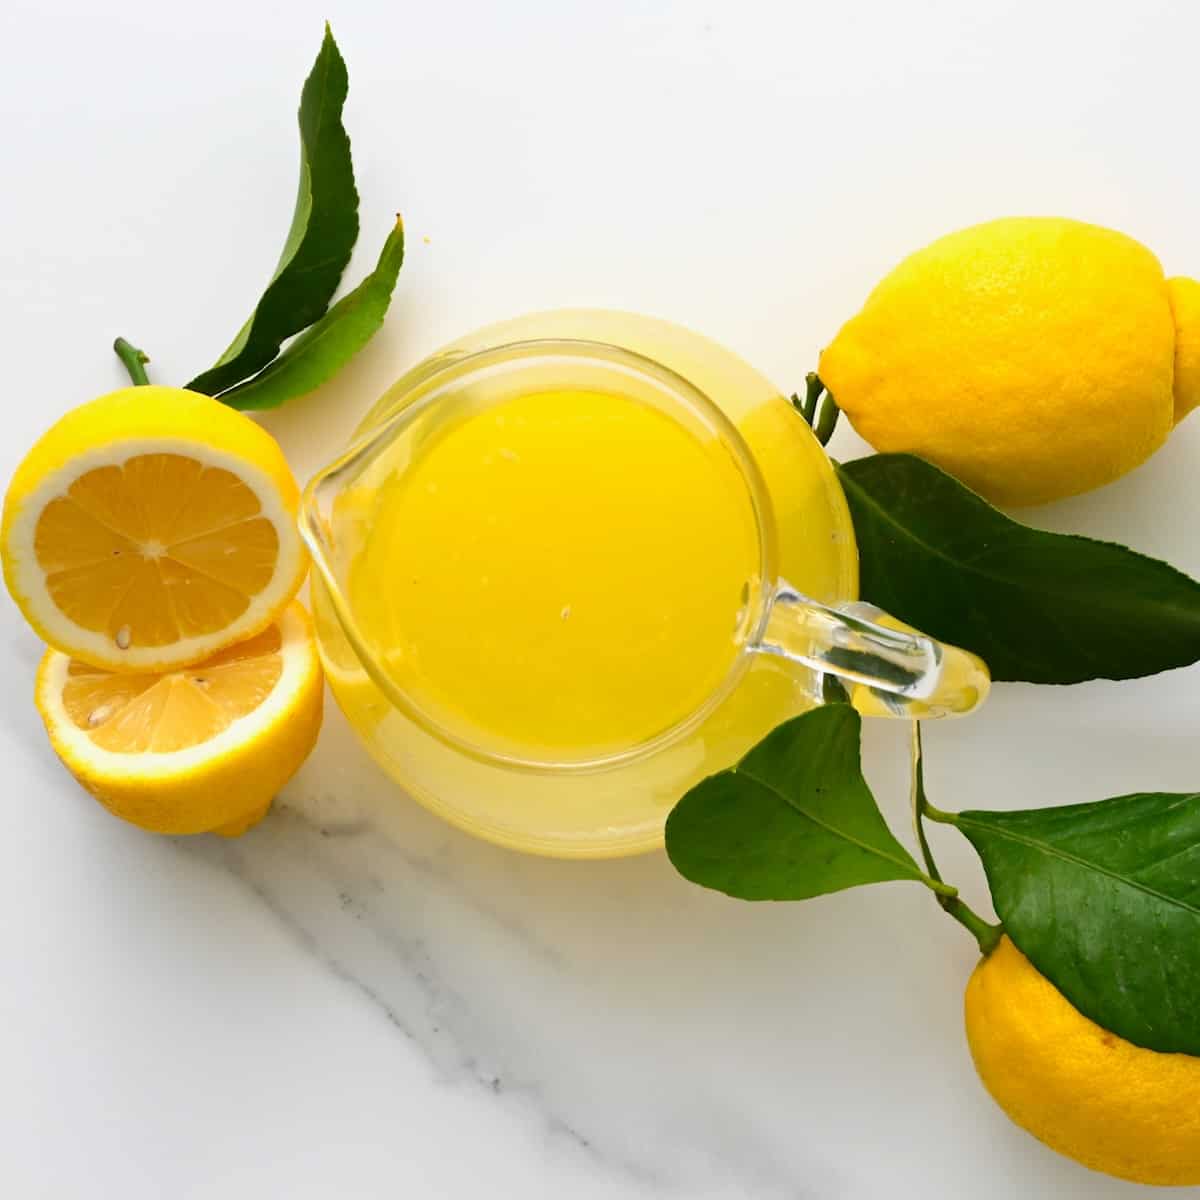 https://www.alphafoodie.com/wp-content/uploads/2022/03/How-to-make-lemon-juice-square-photo.jpeg